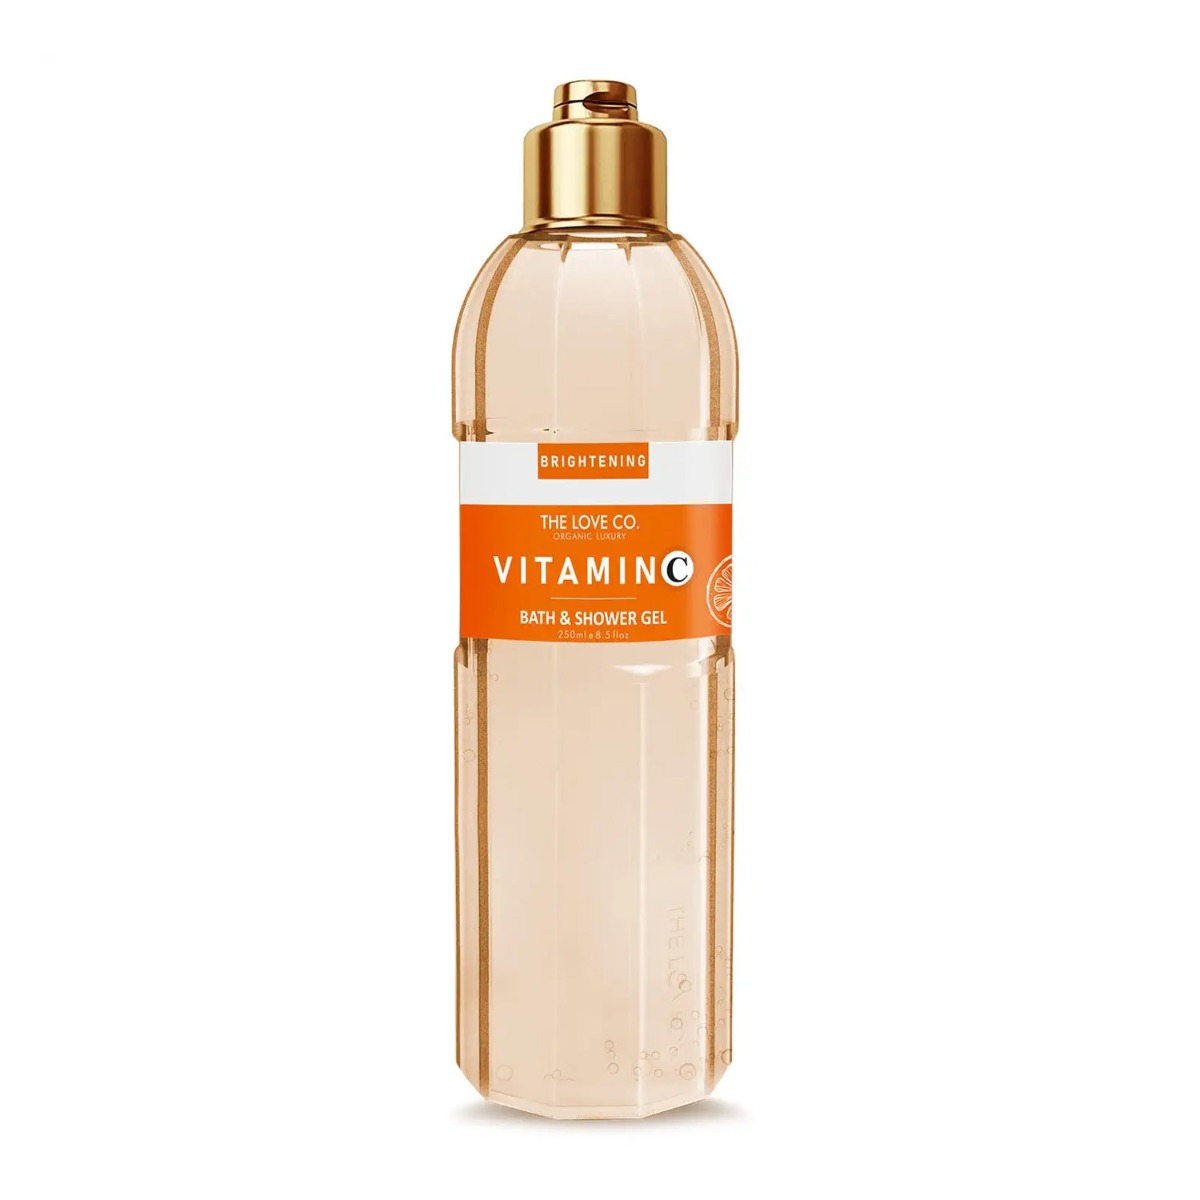 The Love Co. Vitamin C Body Bath & Shower Gel, 250ml